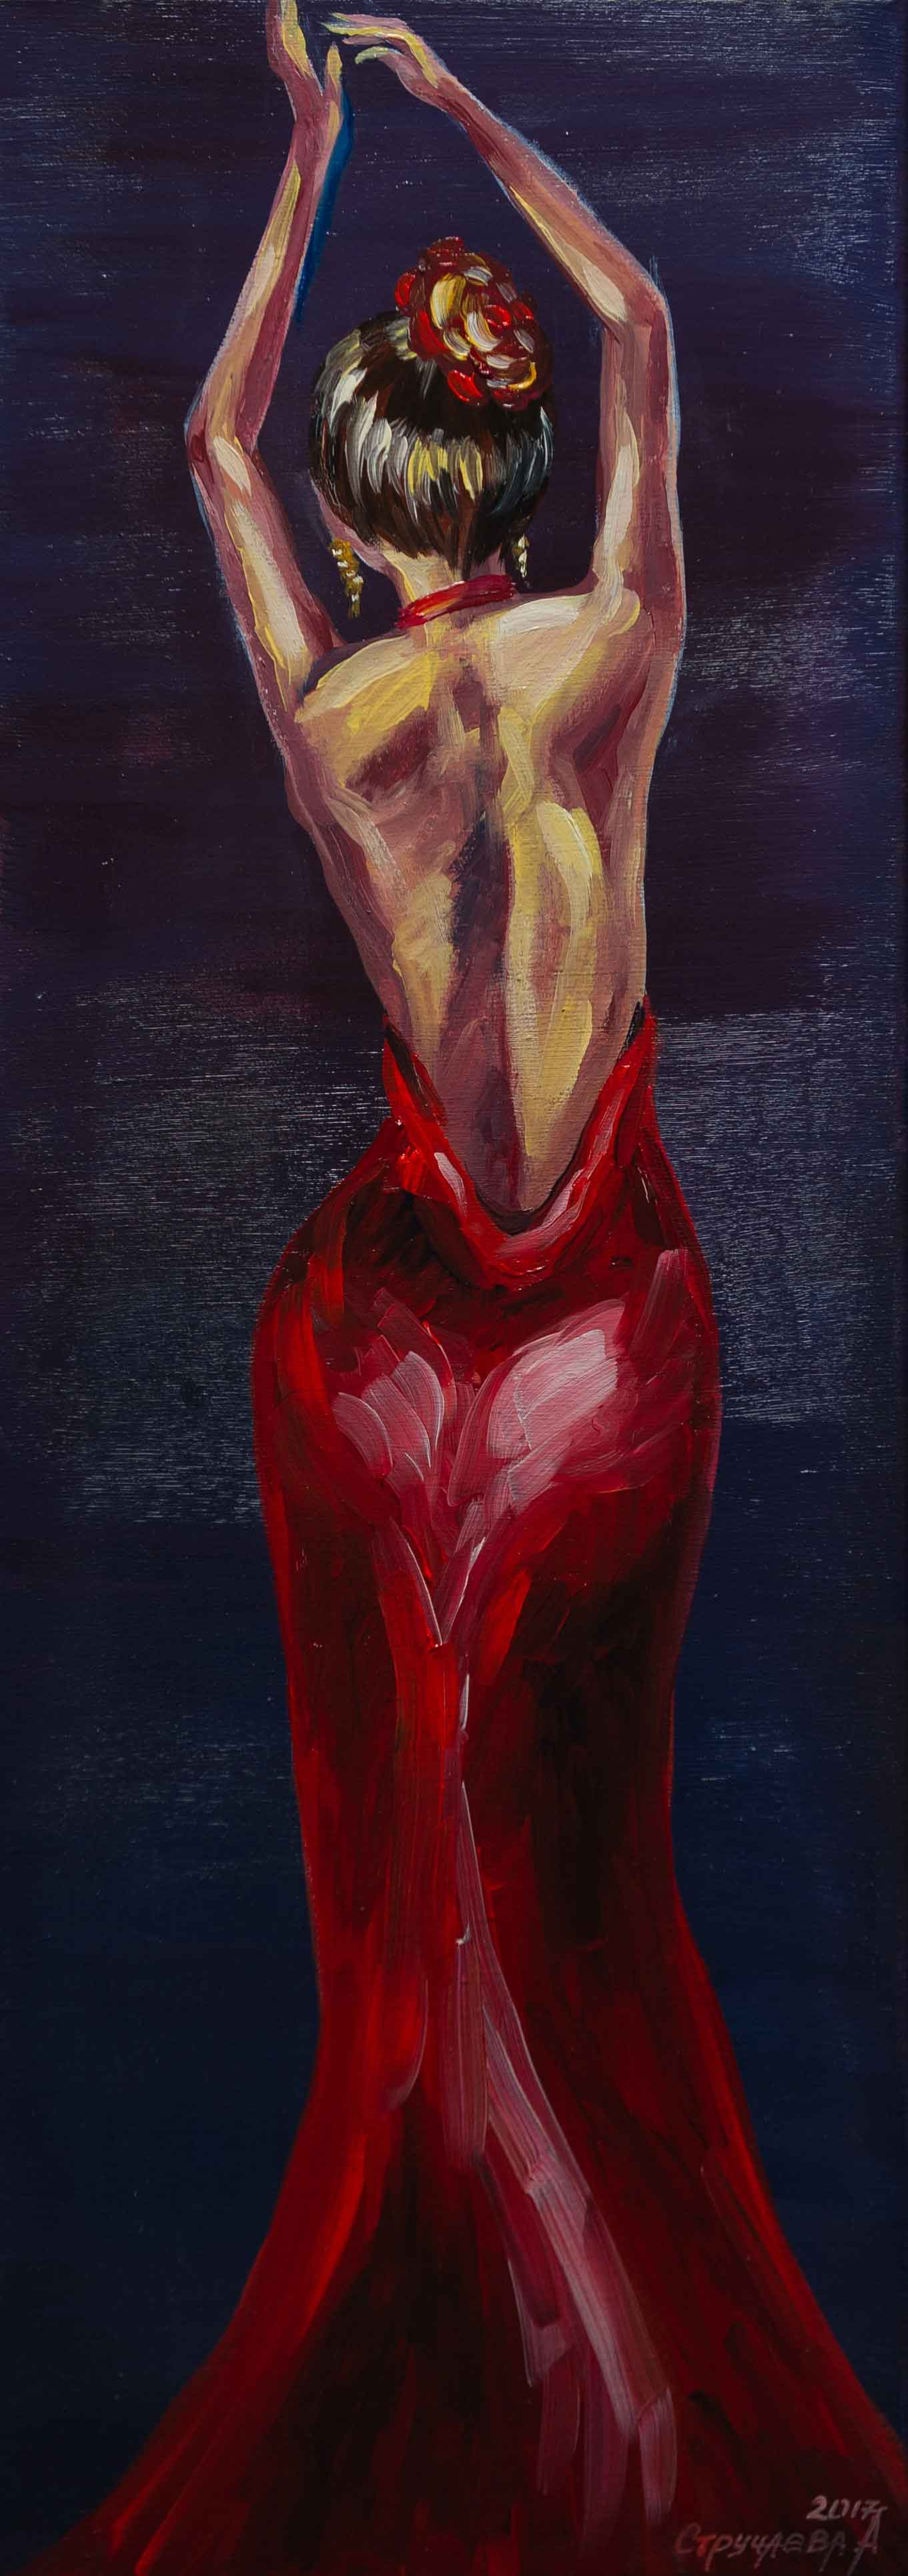 Alla Struchayeva. Painting "Tango"